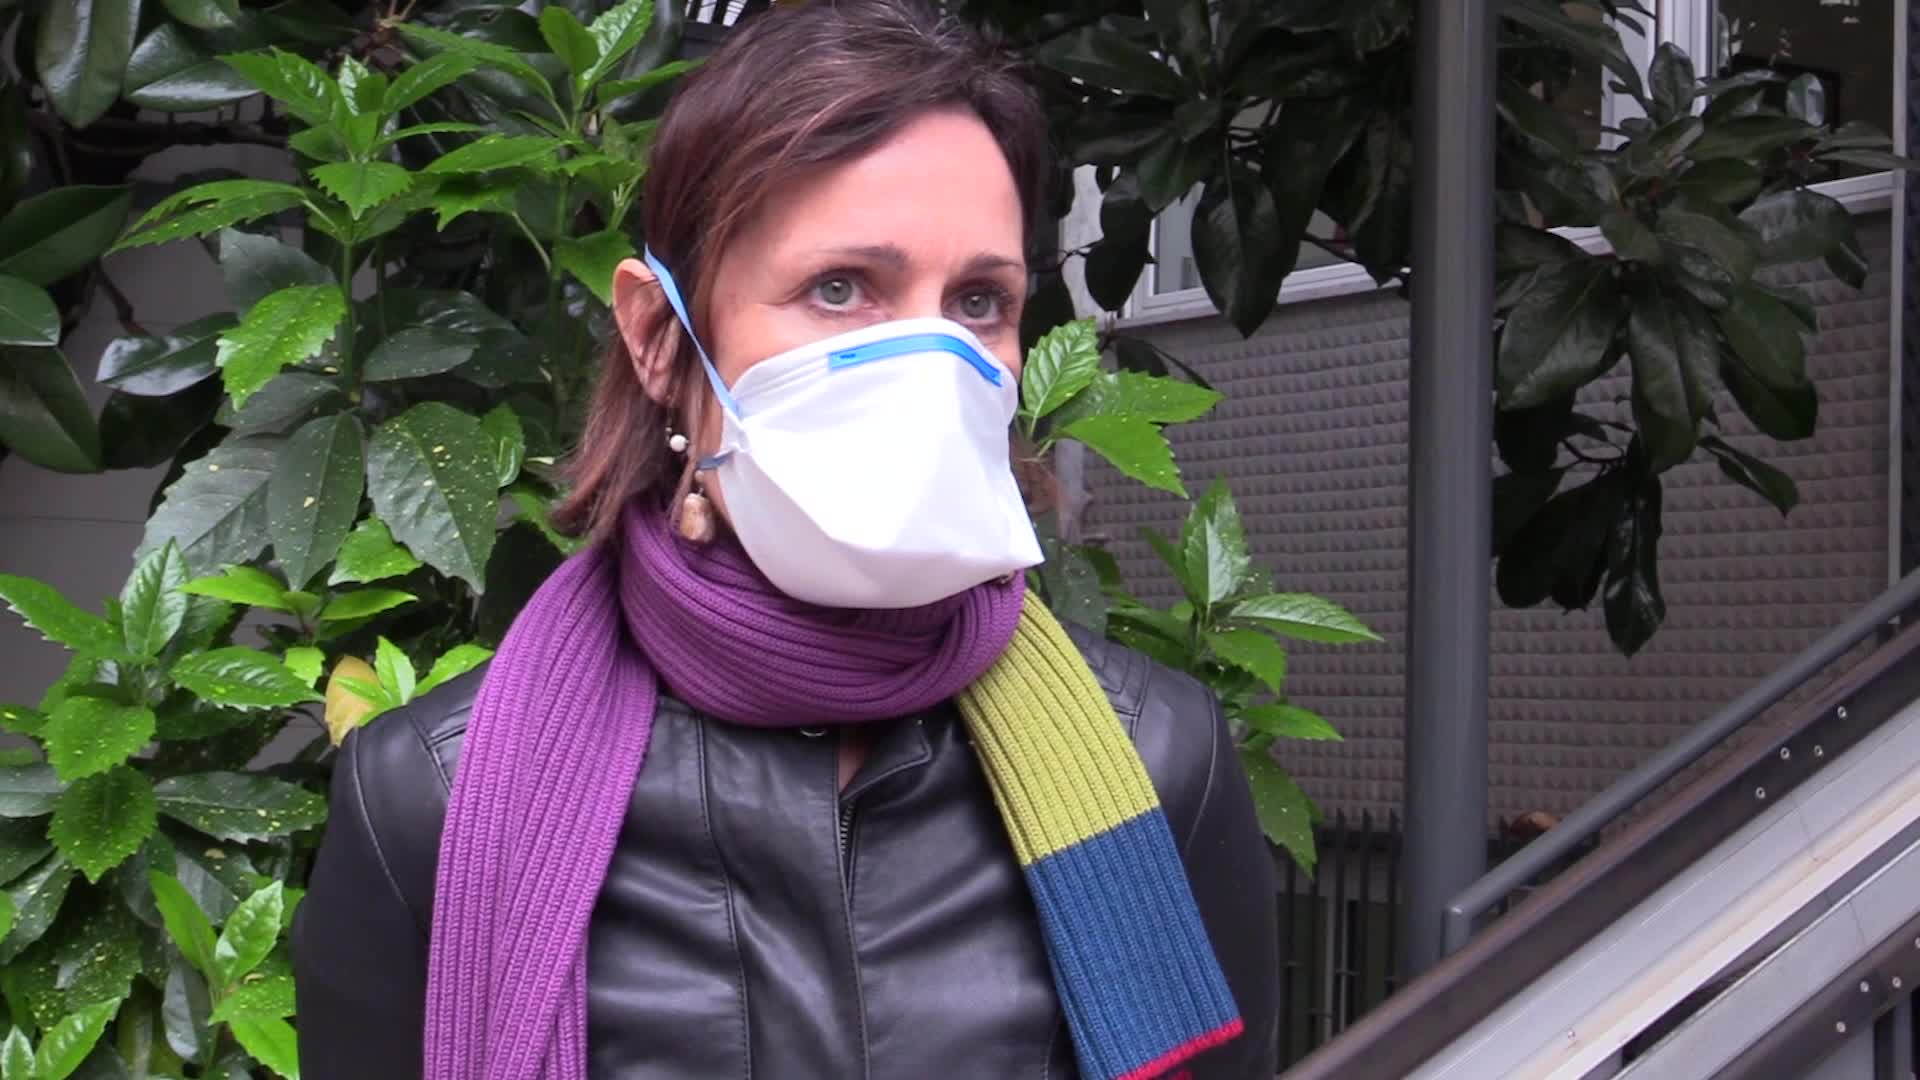 Coronavirus, zero casi in una Rsa di Milano: "Struttura blindata, riapertura sarà lenta"